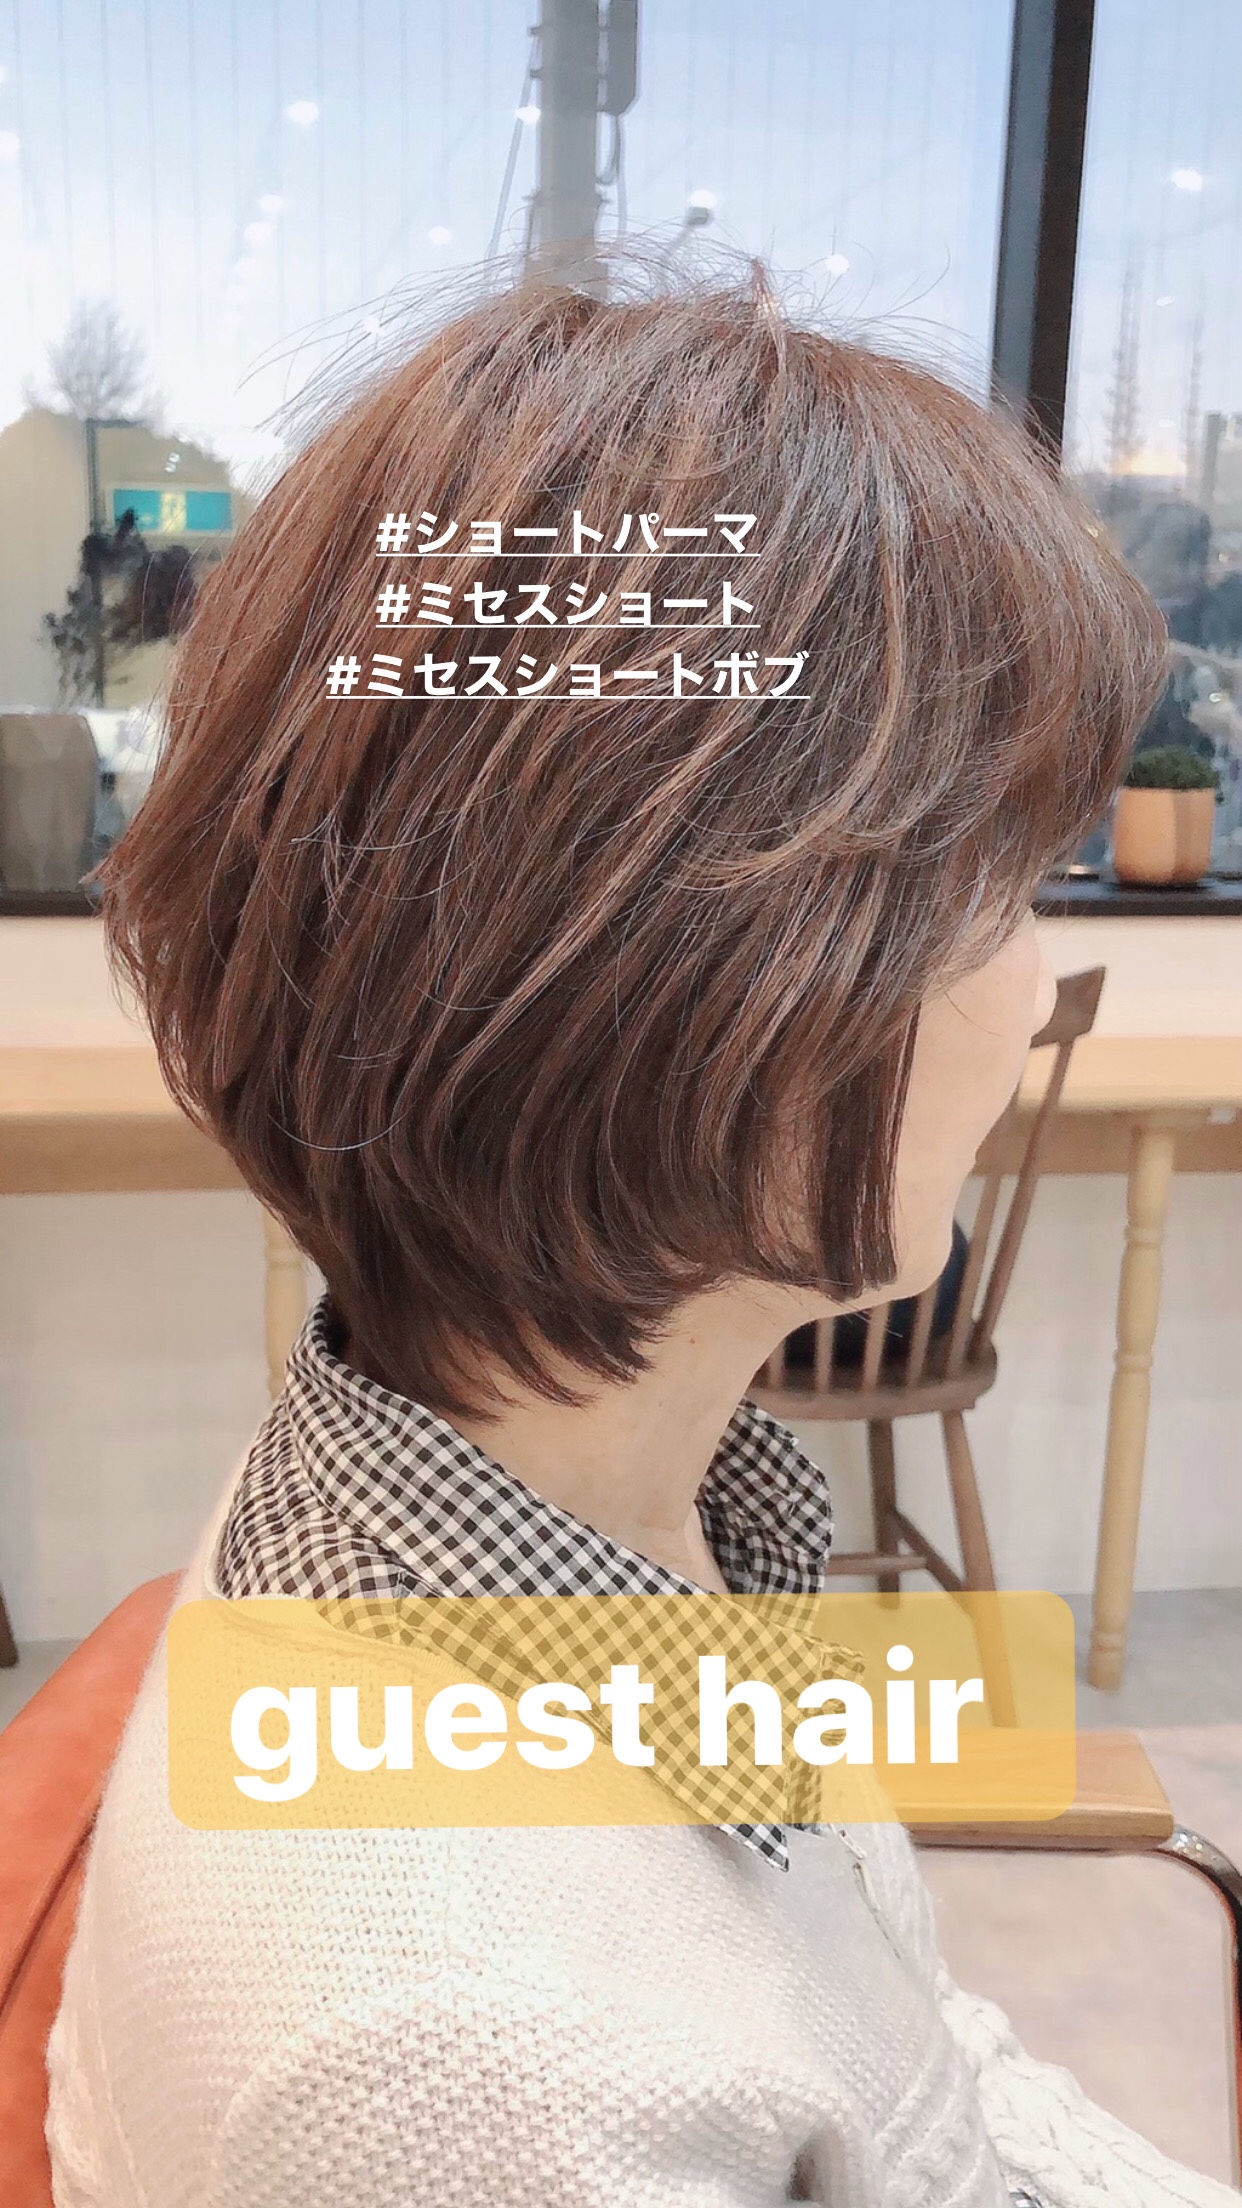 Guest Hair ミセスショート Elena Hair